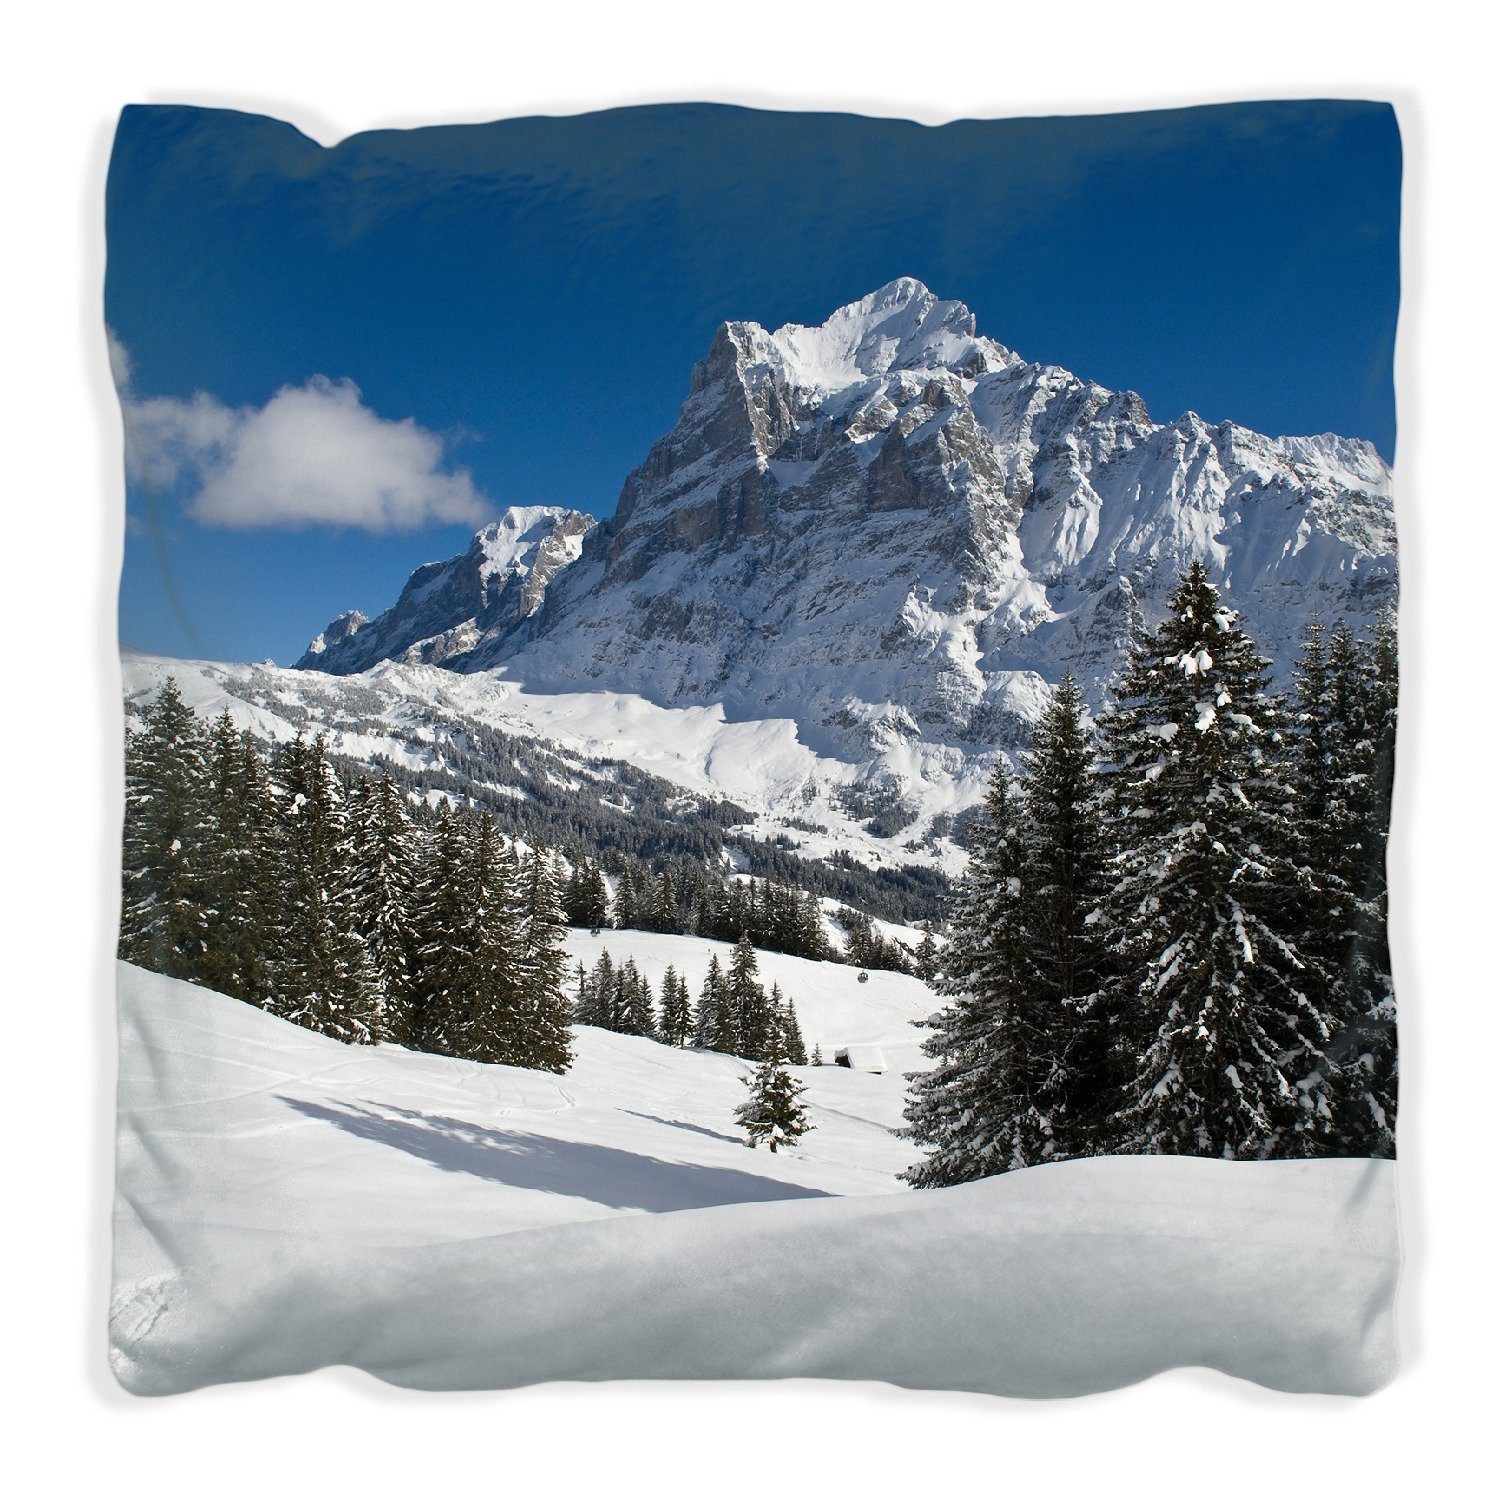 Wallario Berghang handgenäht unter Himmel, Verschneiter Dekokissen blauem